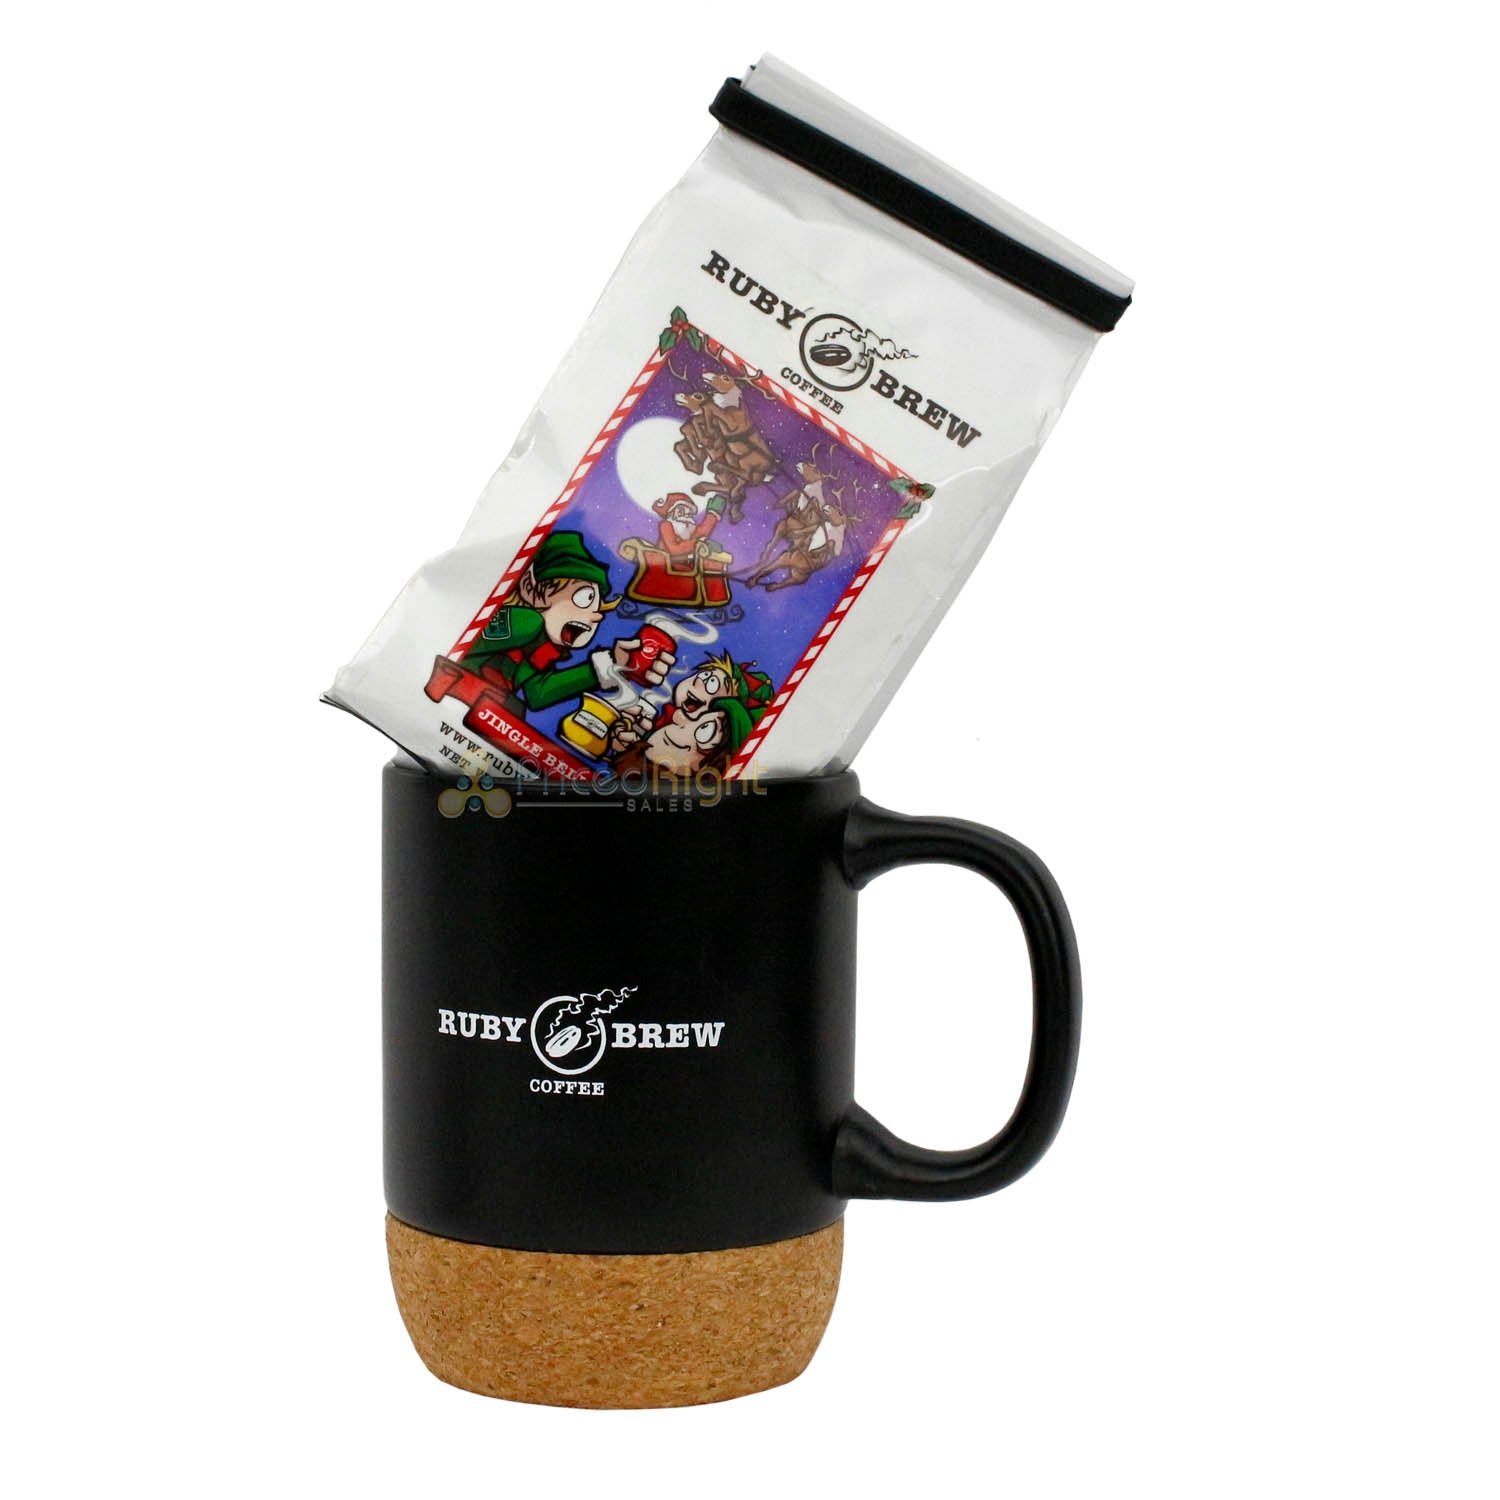 Ruby Brew Cork Bottom Ceramic Modern Coffee Mug w/ Splash Proof Lid Black 12 oz